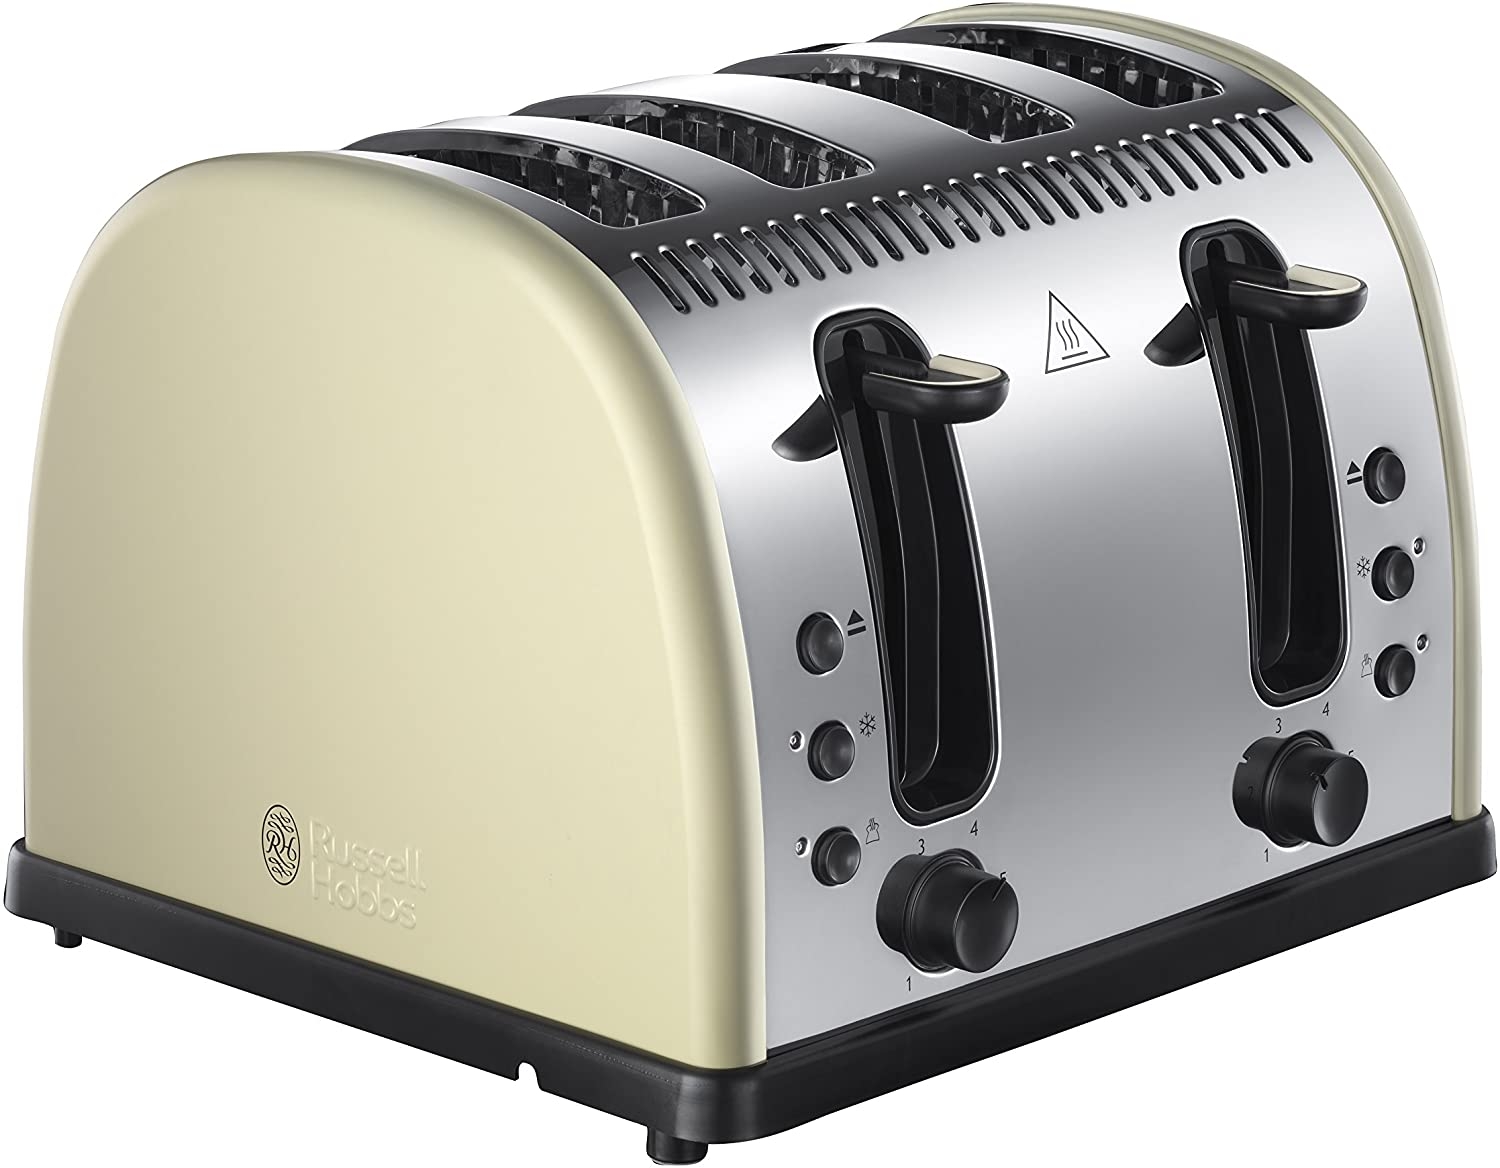 Russell Hobbs 21302 Legacy Cream 4 Slice Toaster